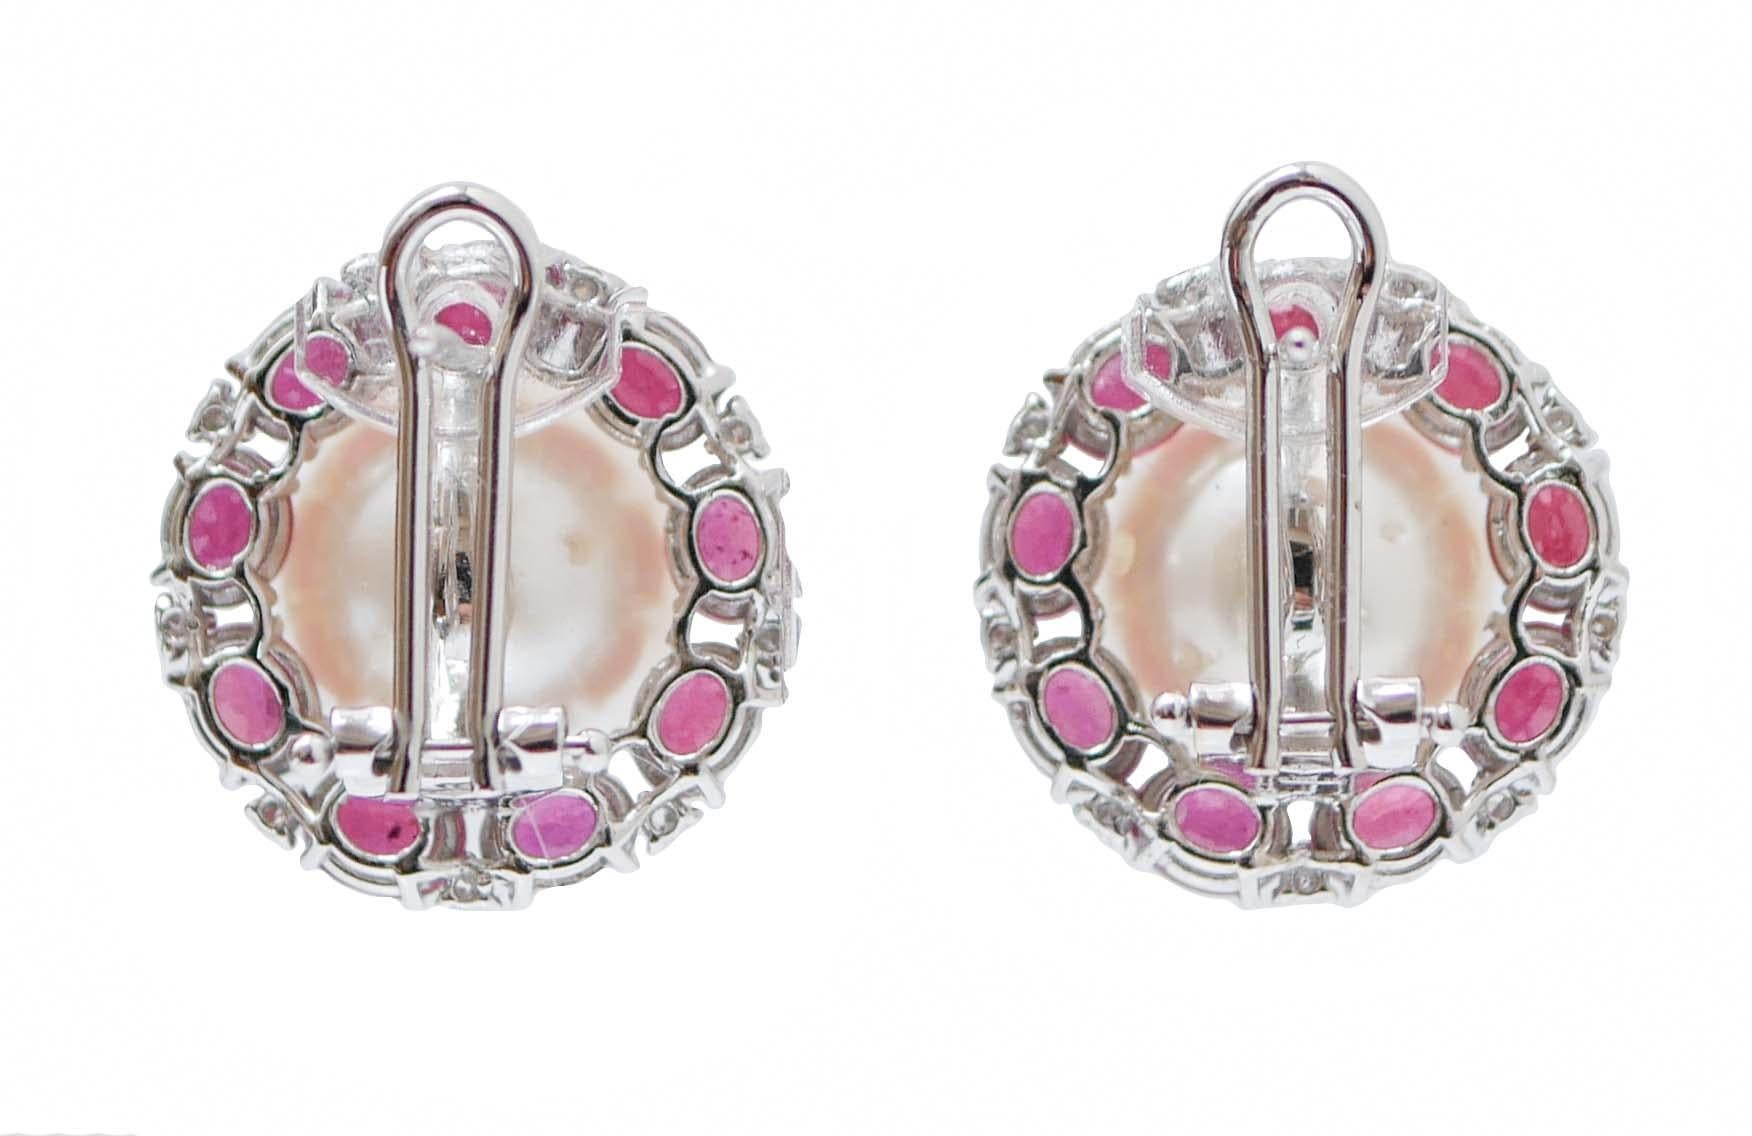 Retro South-Sea Pearls, Rubies, Diamonds, 14 Karat White Gold Earrings. For Sale